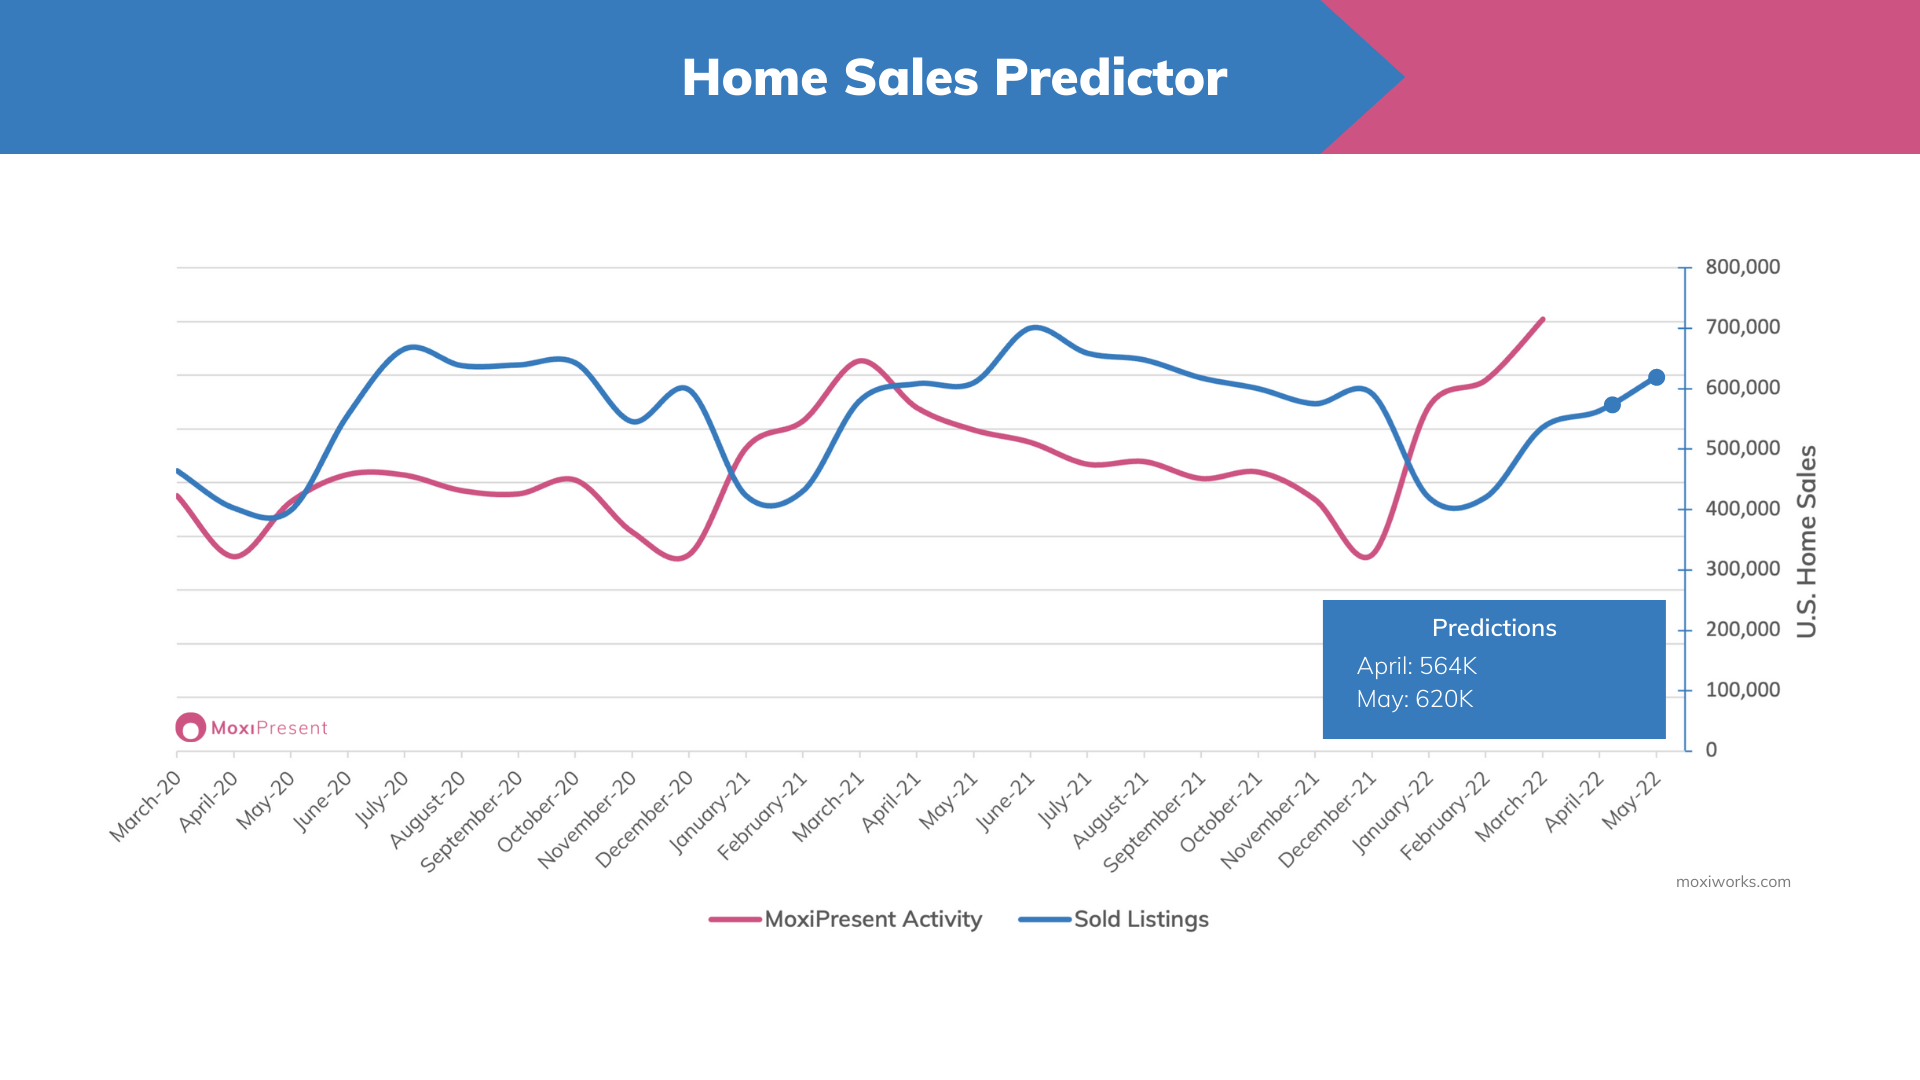 MoxiWorks Home Sales Predictor